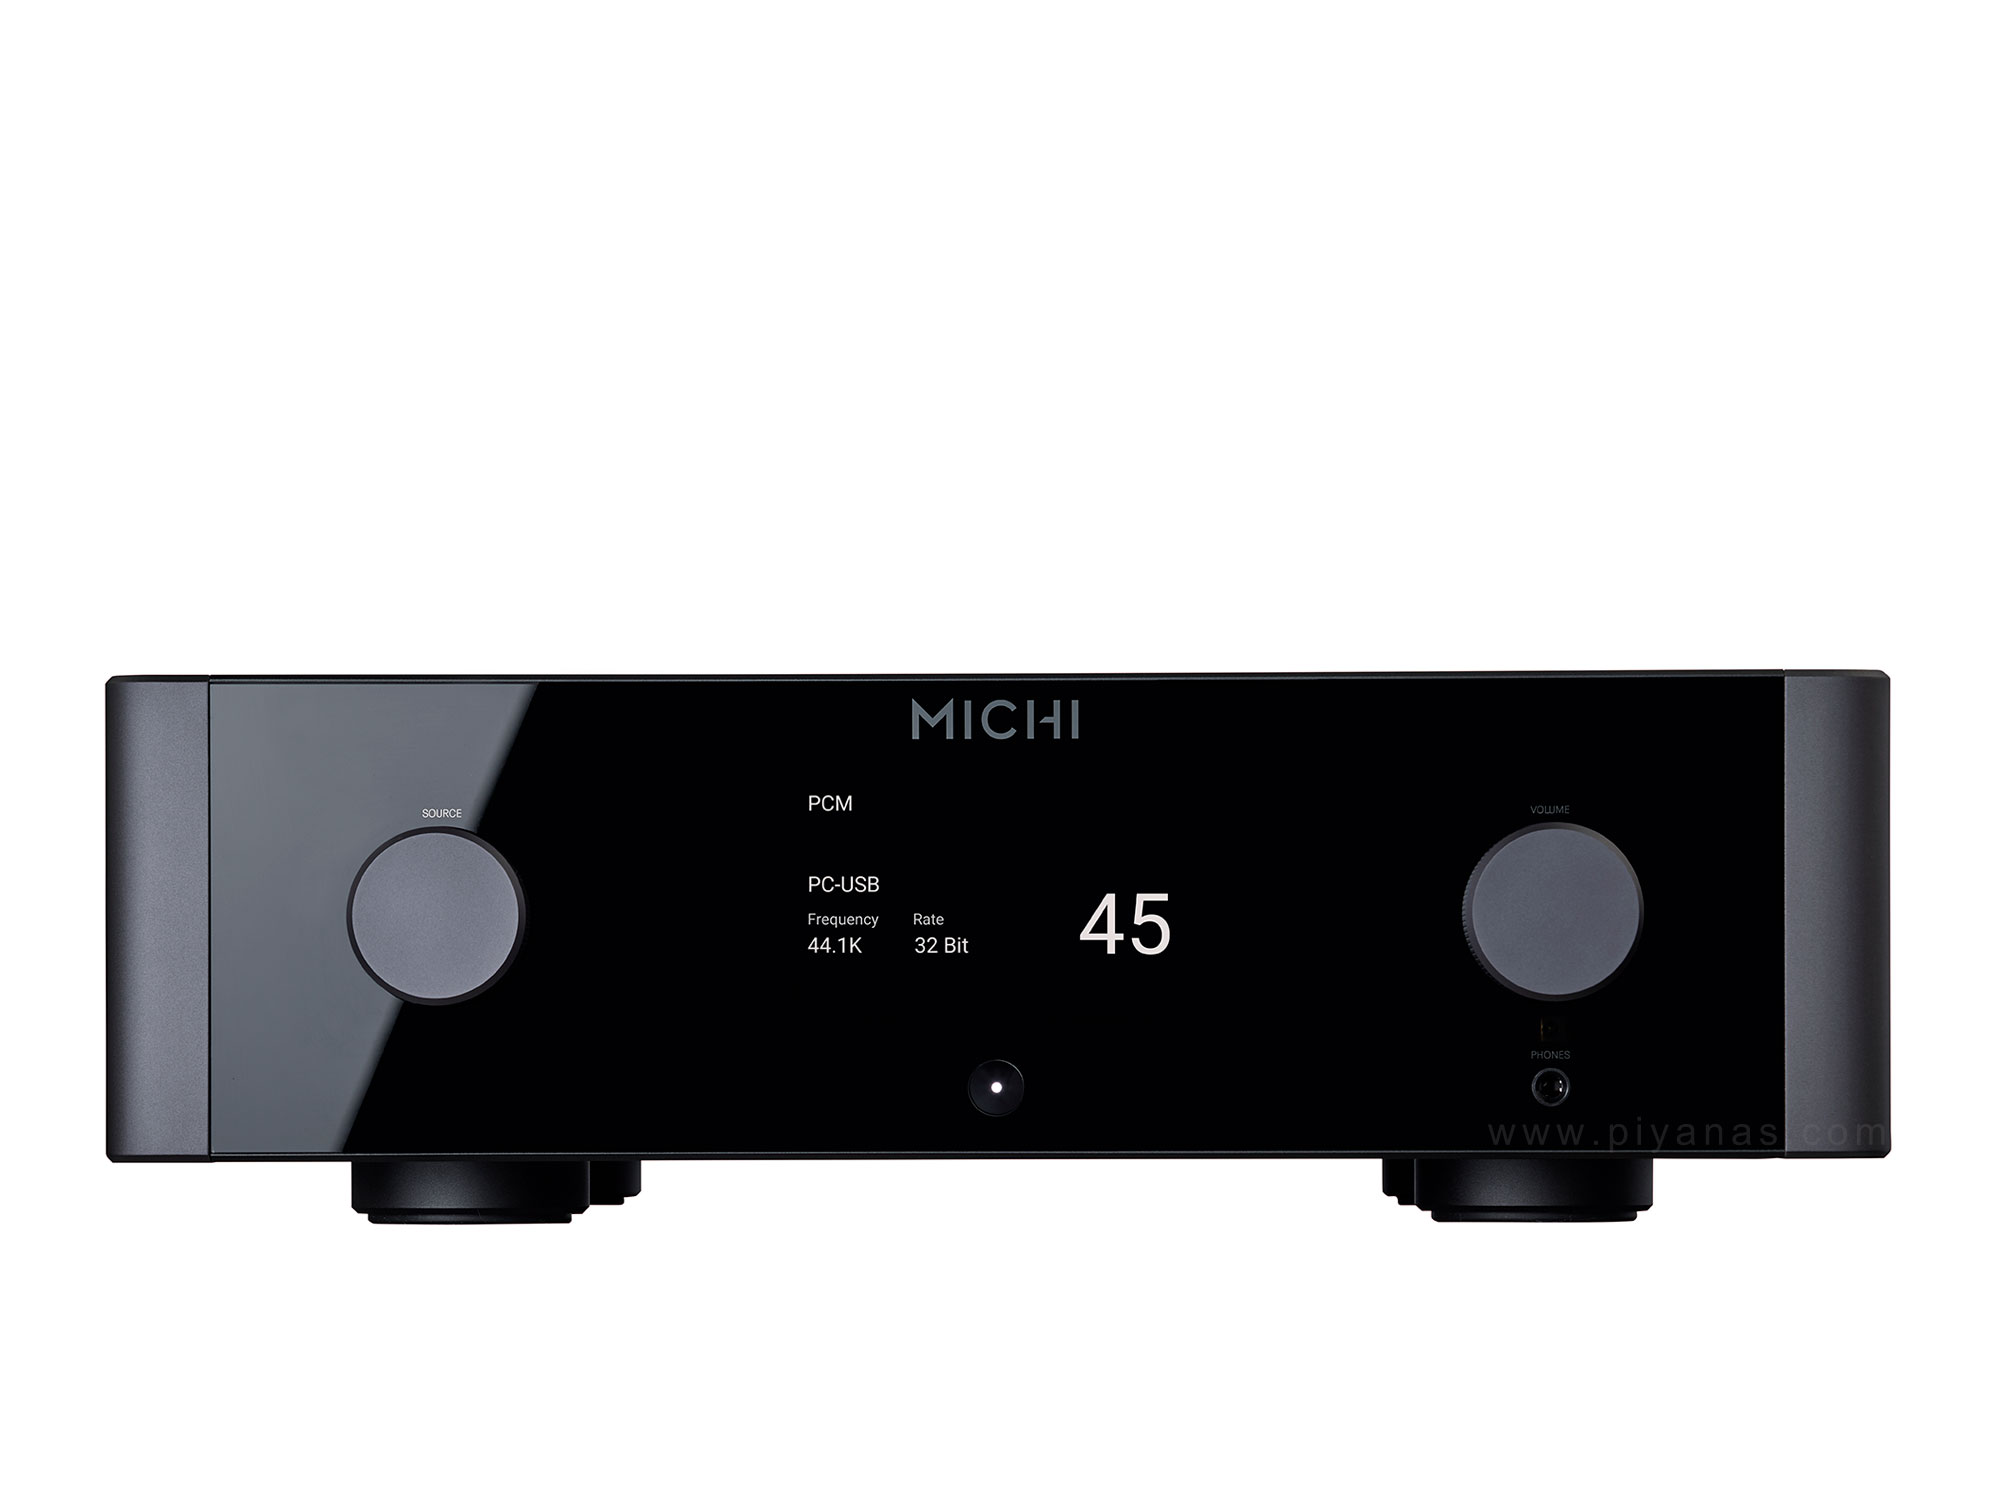 MICHI P5 (Pre-Amp)
(Demo) สินค้าตัวโชว์ราคาพิเศษ